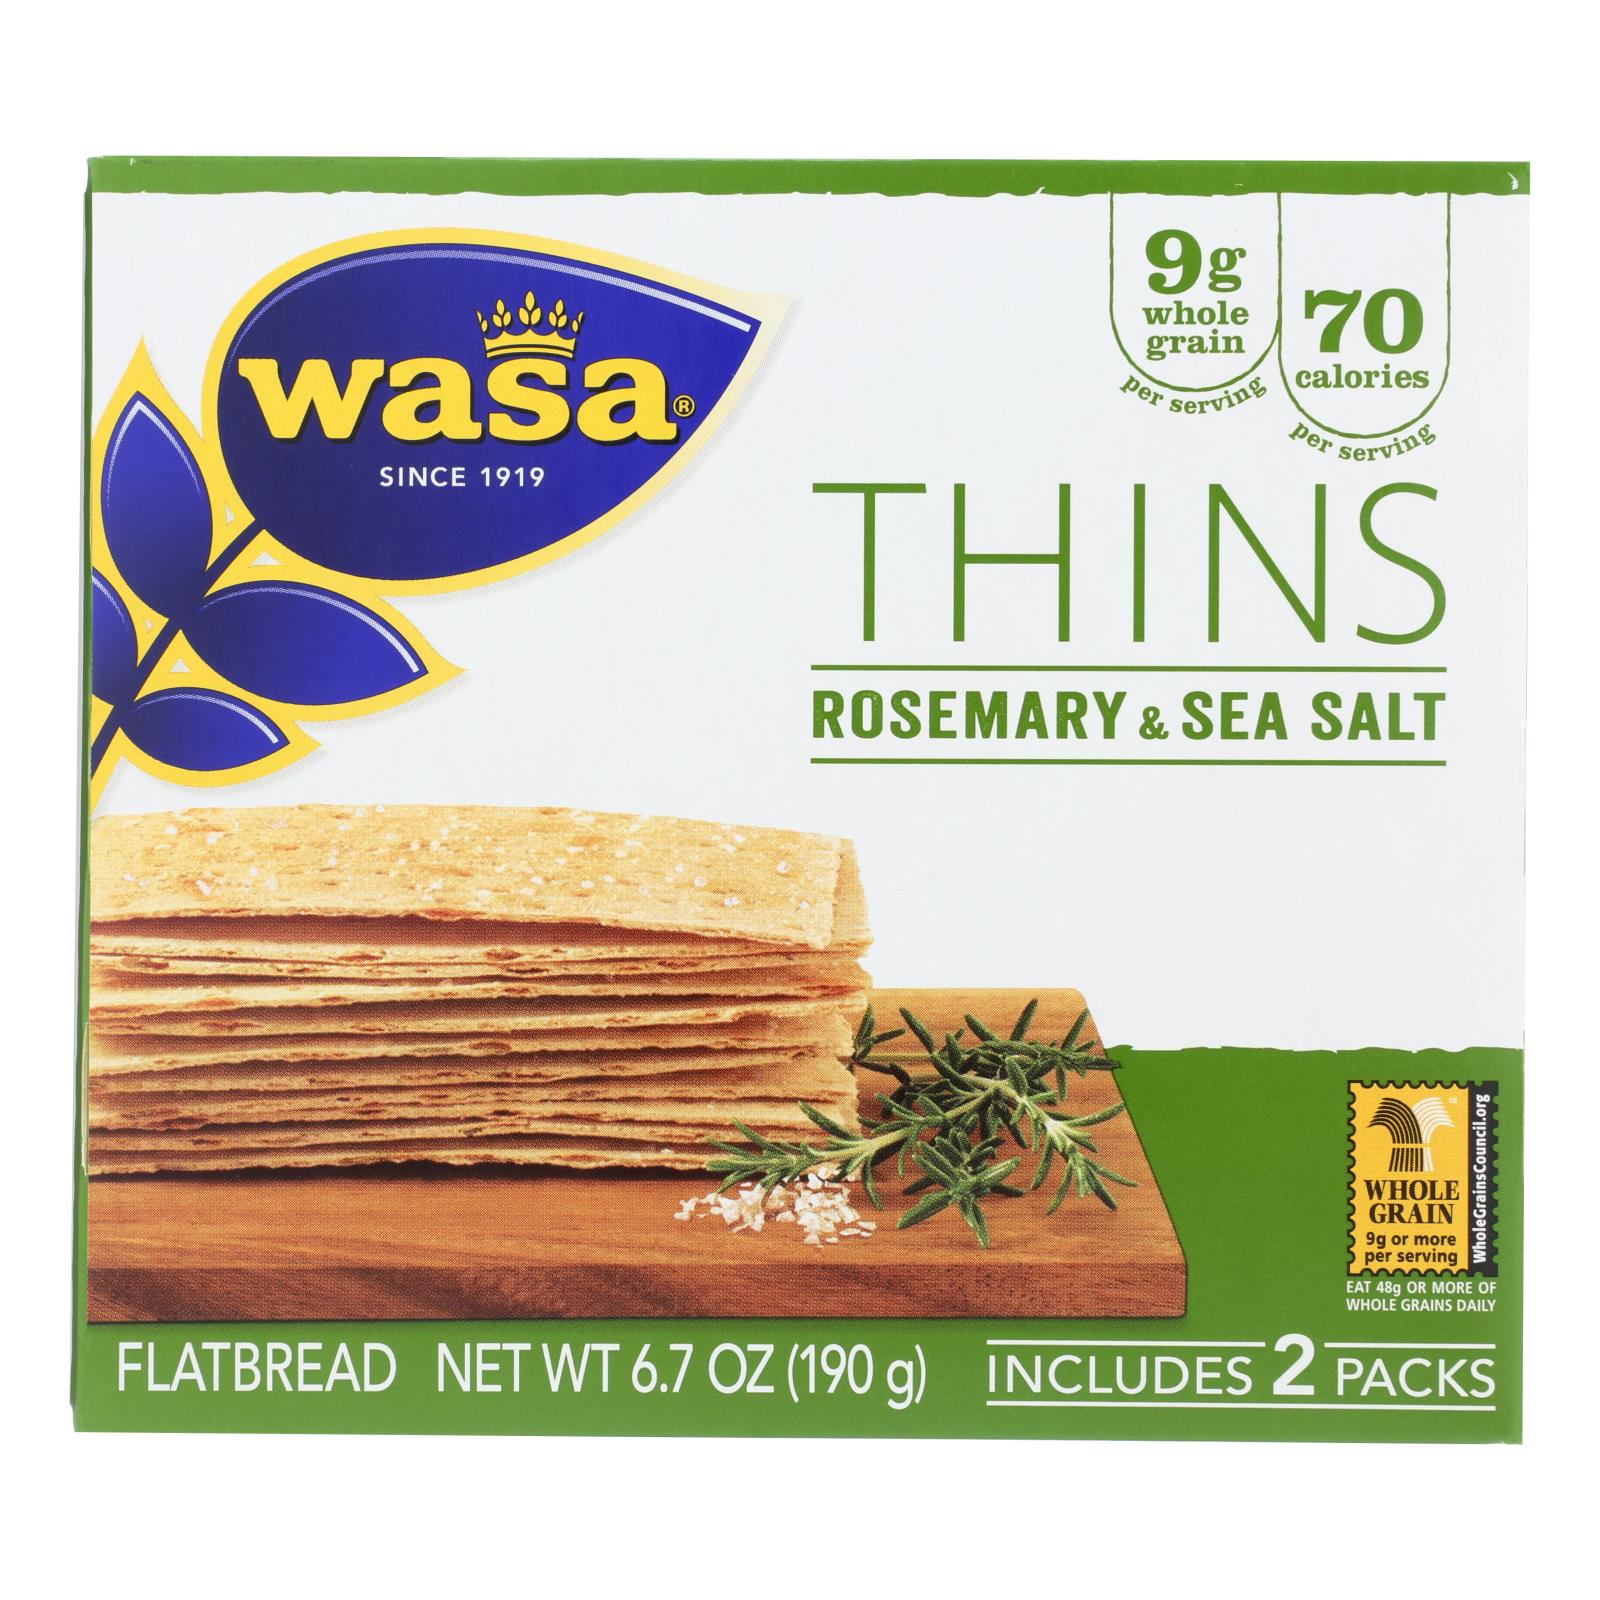 Wasa Rosemary & Salt Flatbread Thins - 10개 묶음상품 - 6.7 OZ